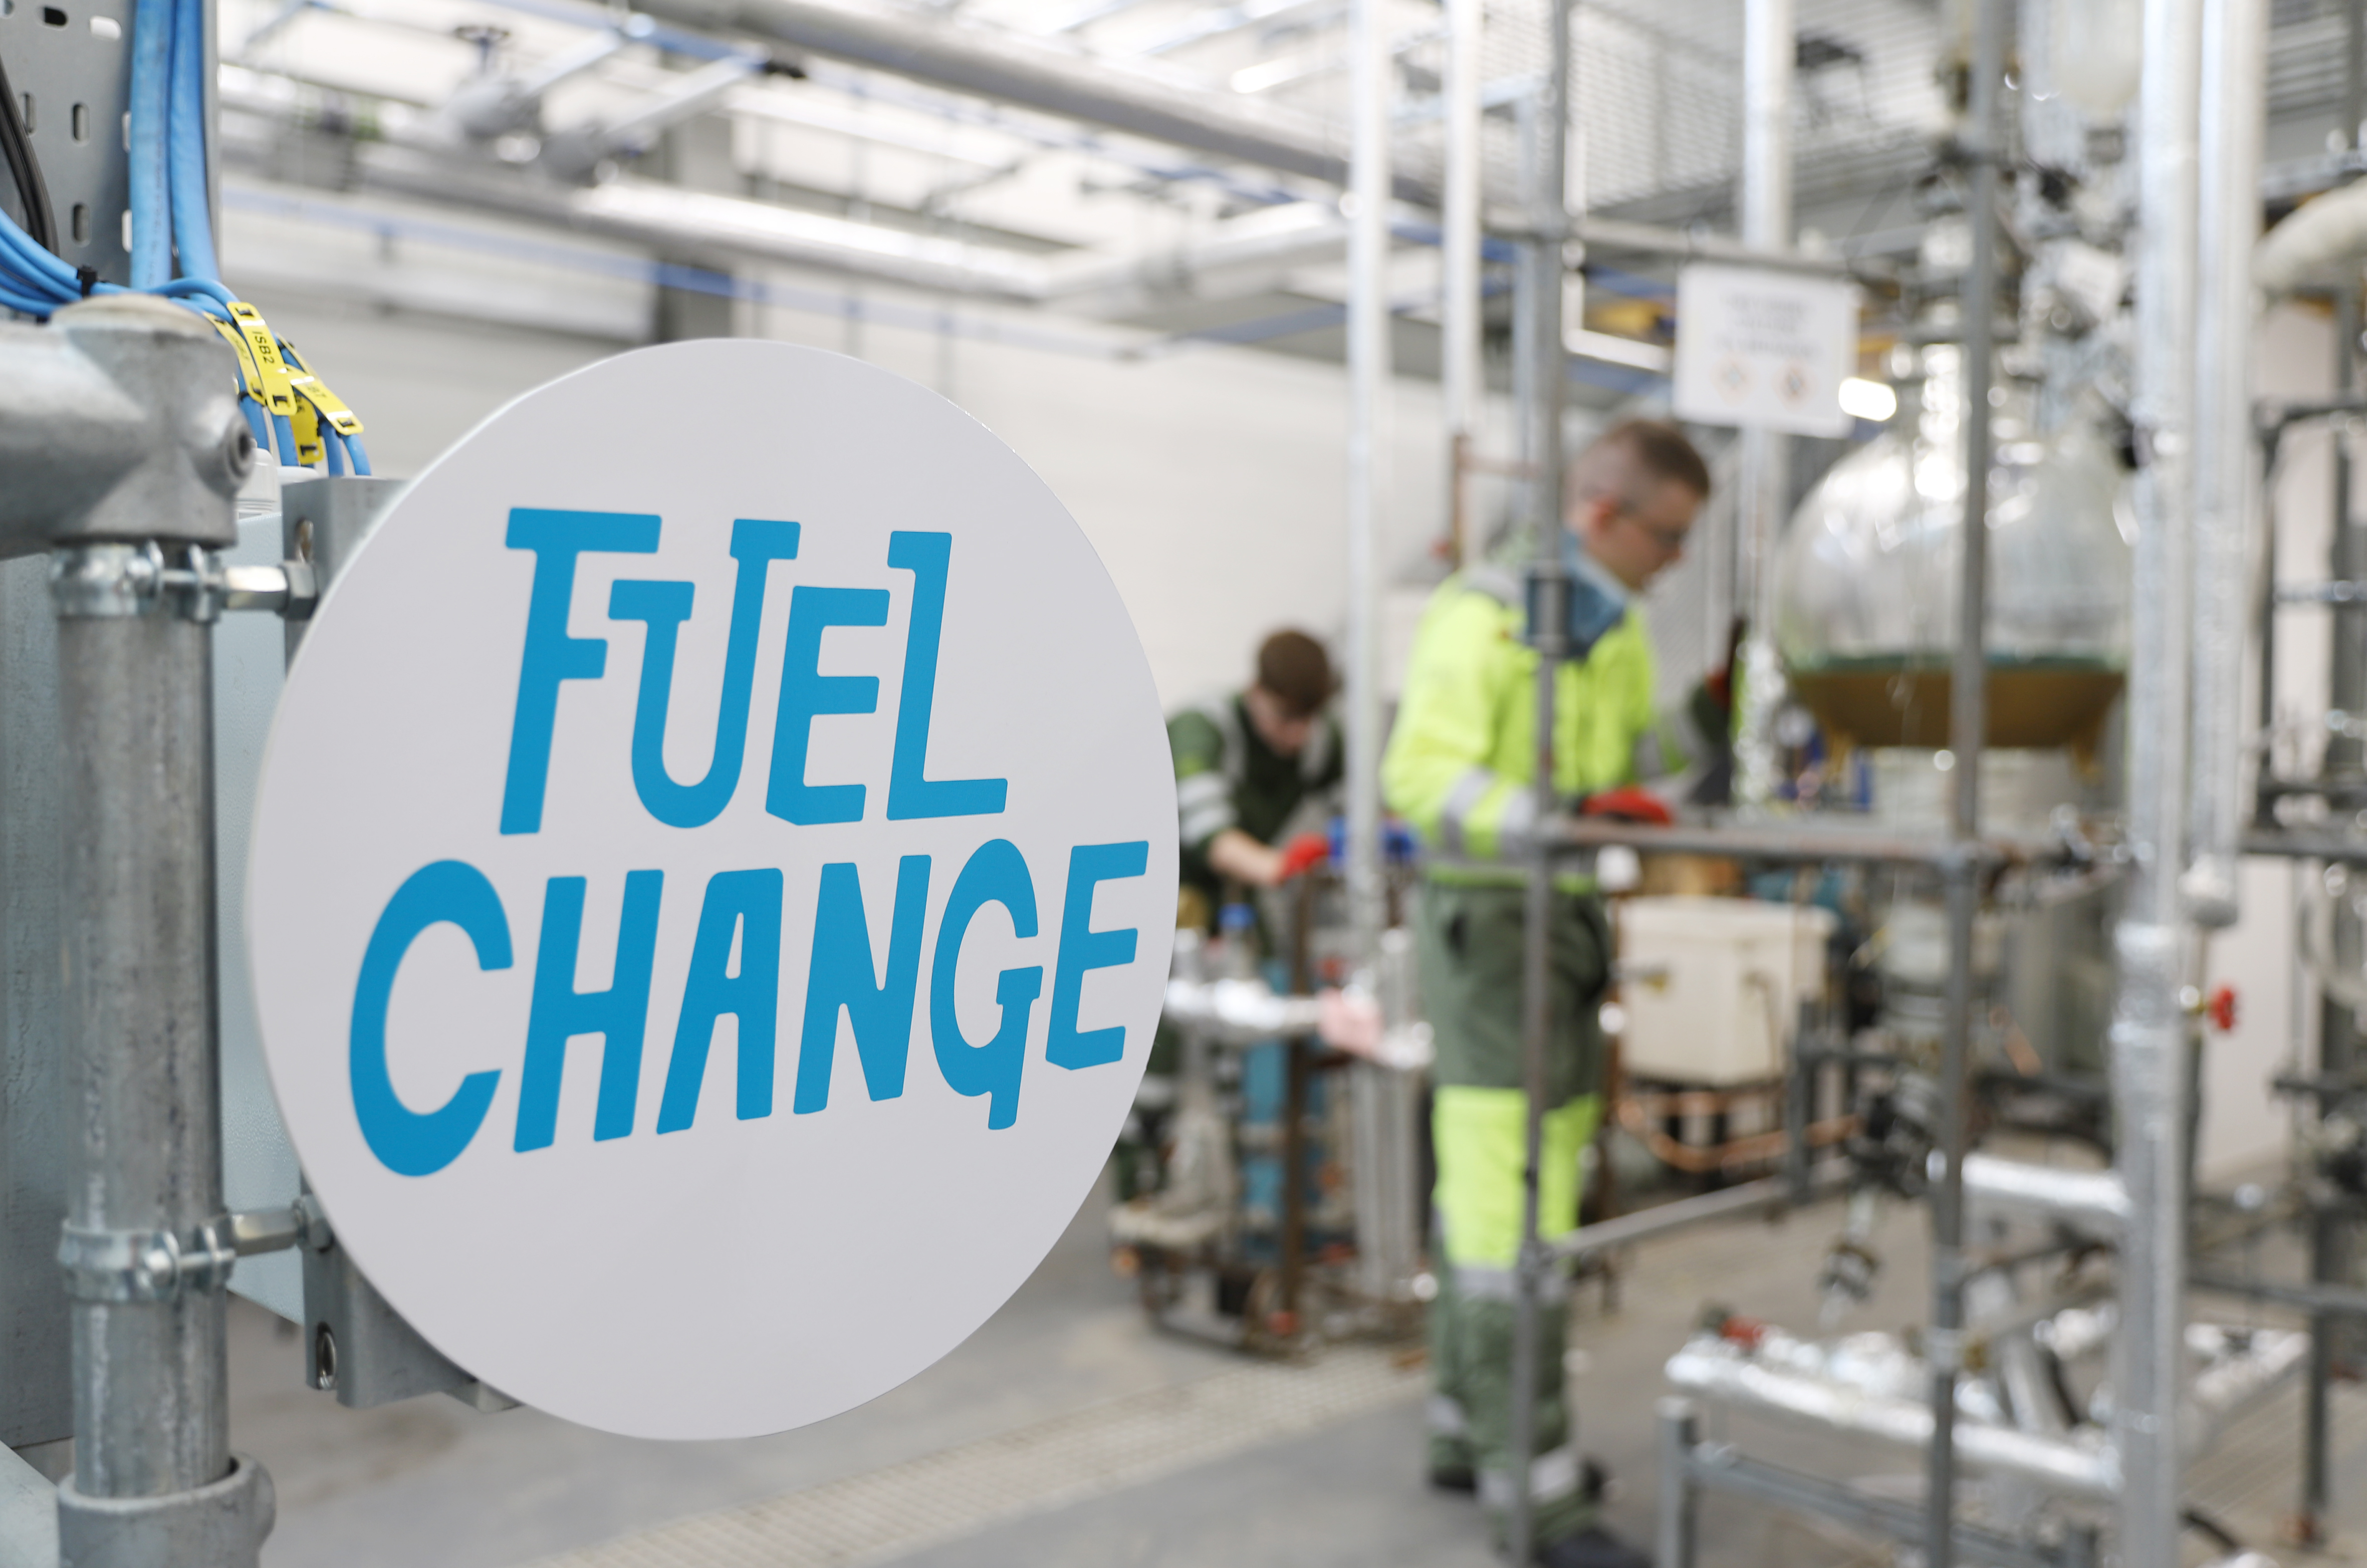 Apprentice talent to “fuel change” for a low carbon Scotland